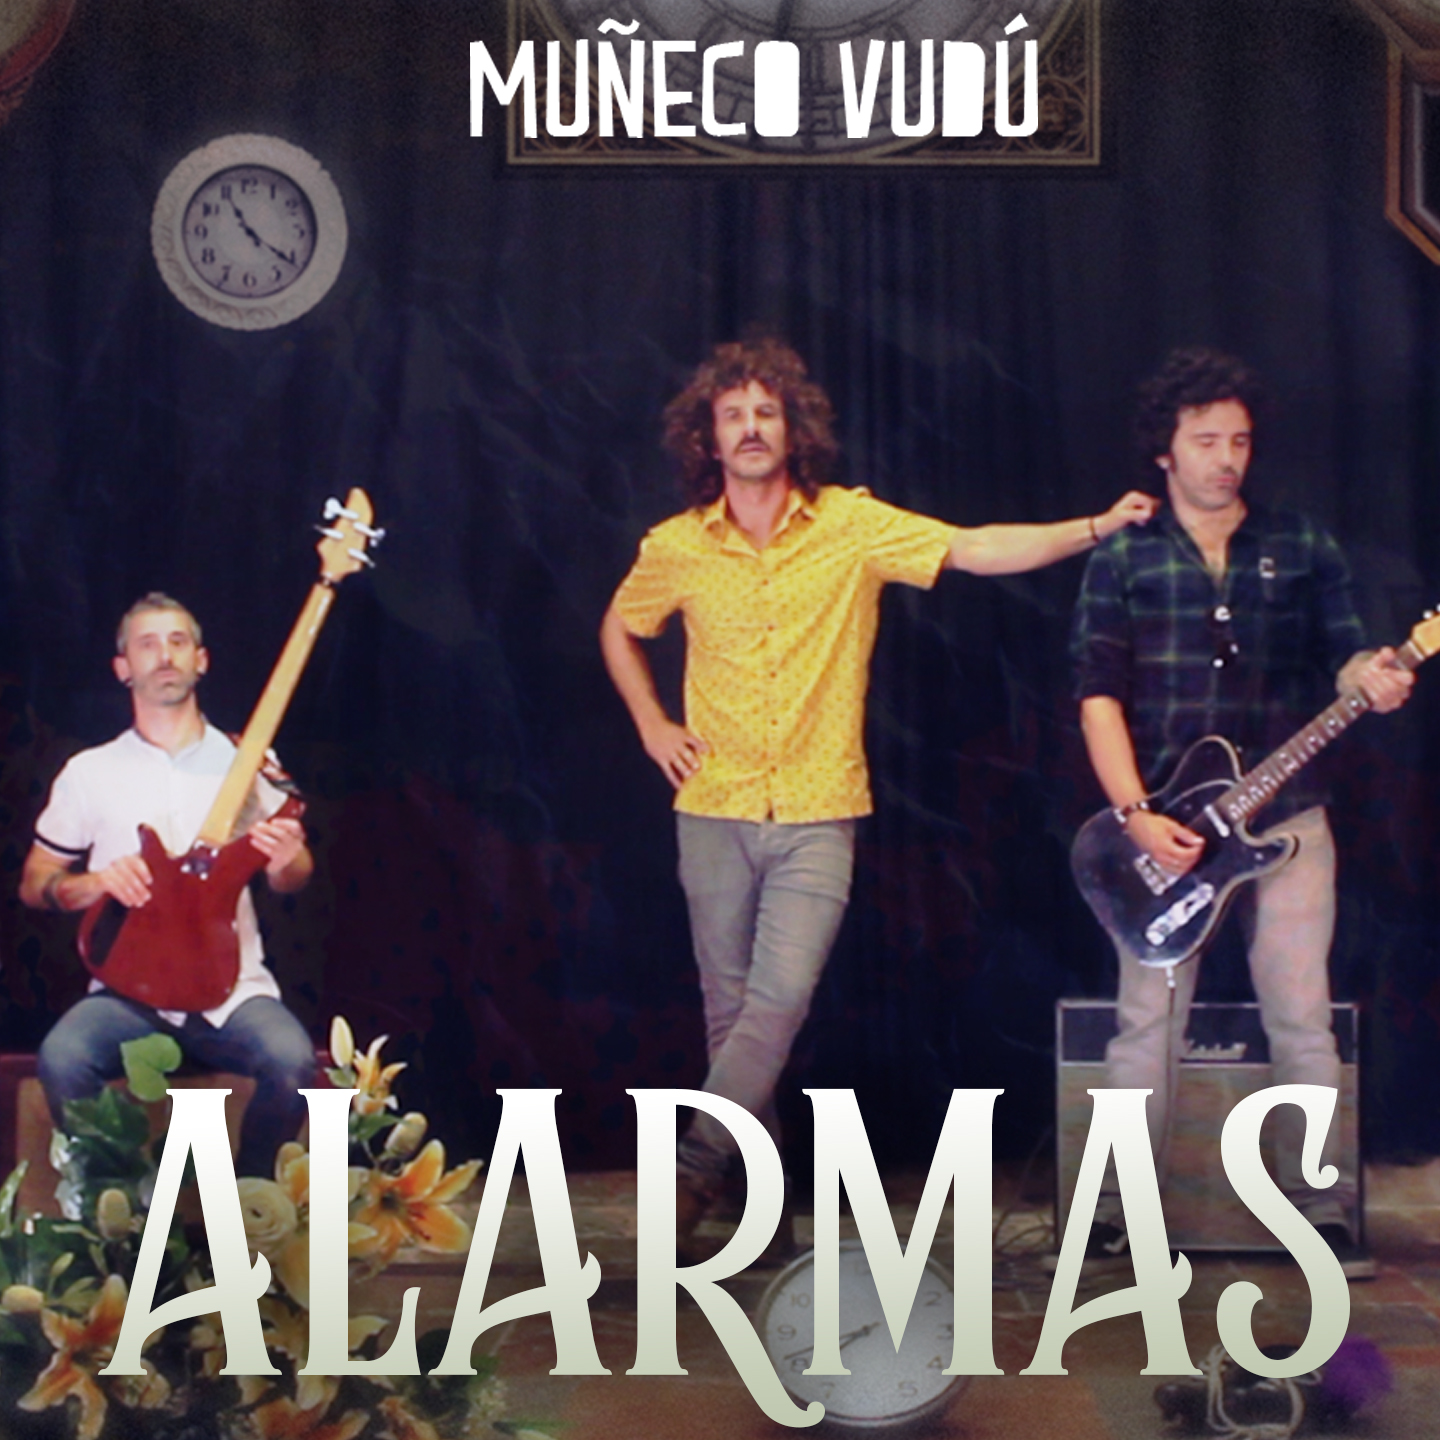 Muñeco Vudú - Alarmas (Video)